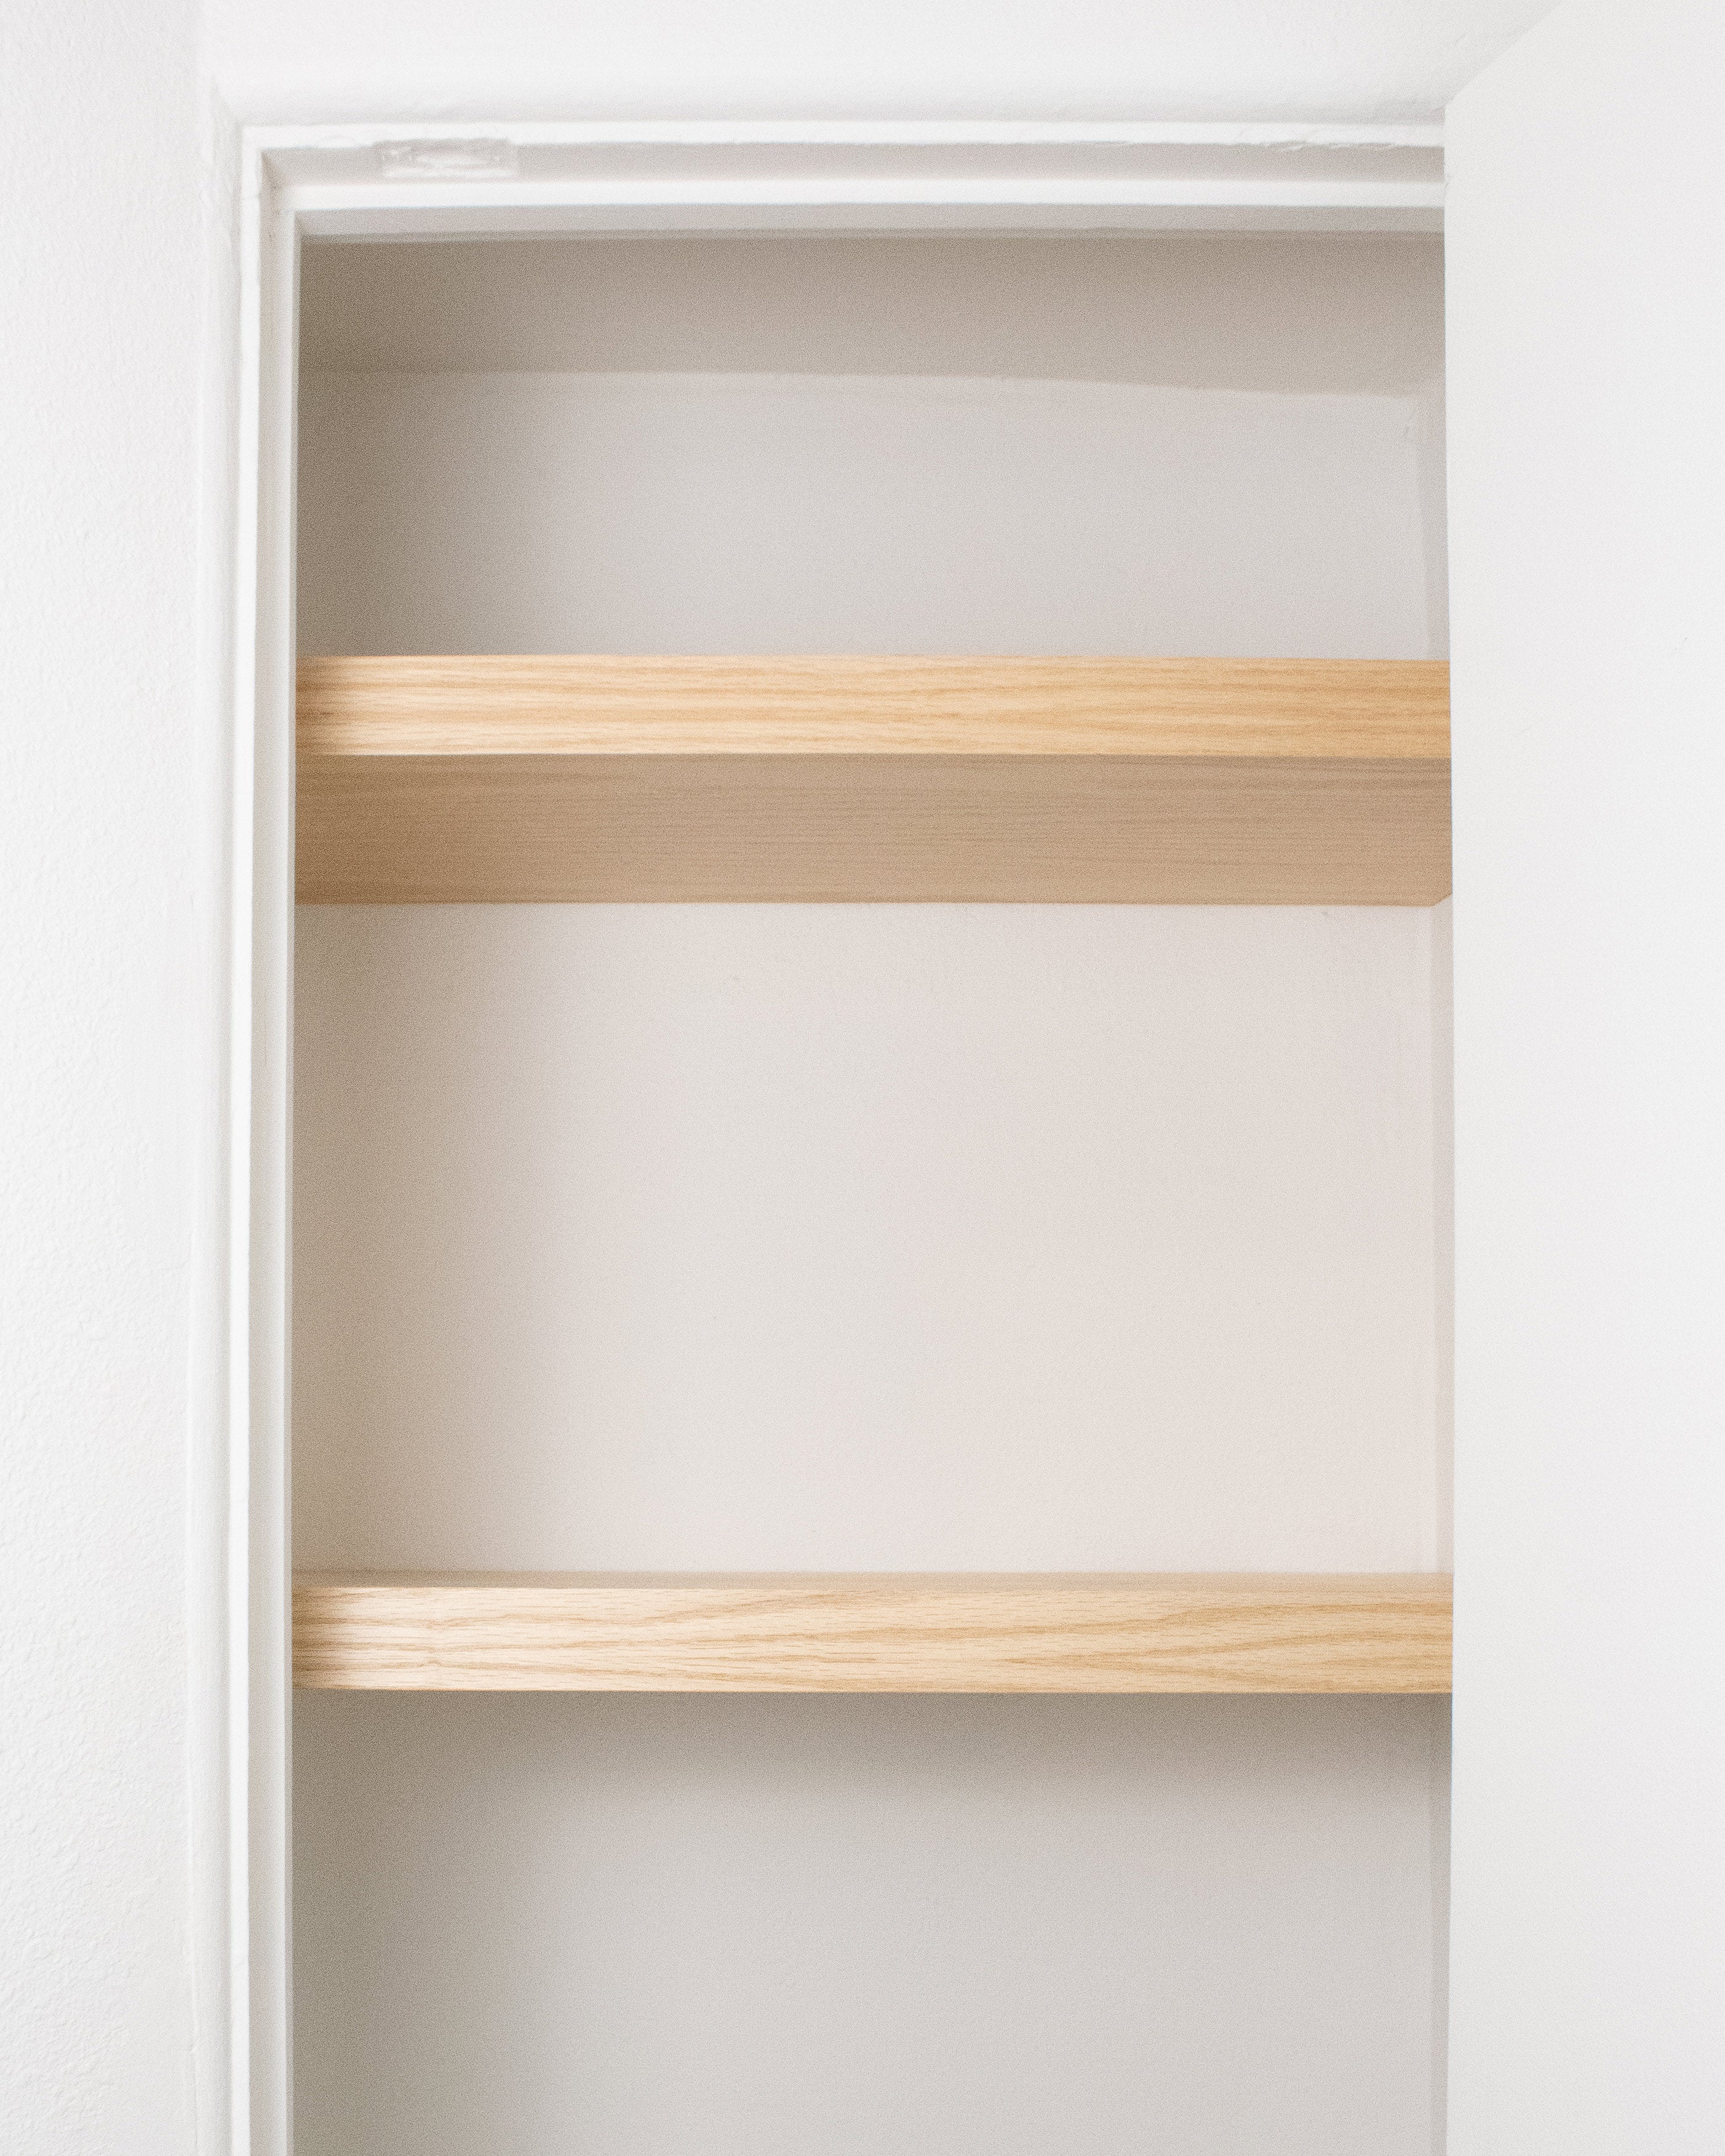 Walnut 2-4" thick Cabinet Top / Slab Shelf